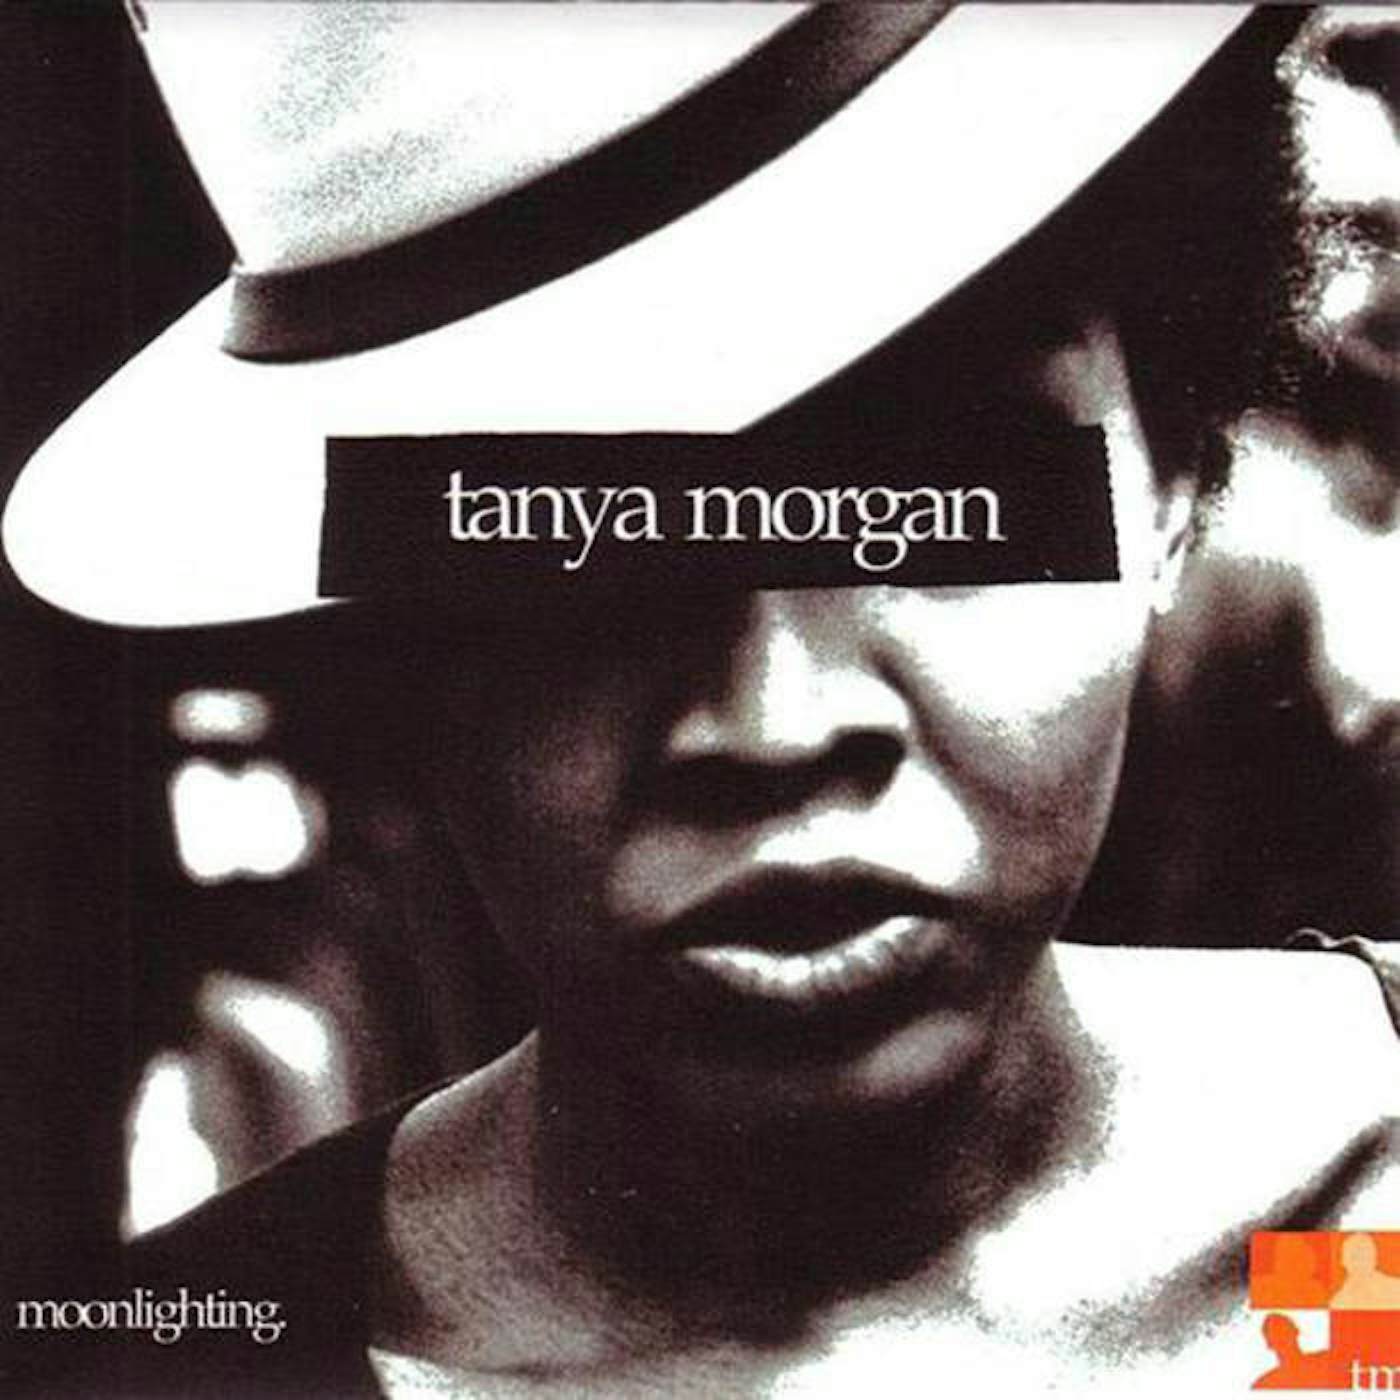 Tanya Morgan MOONLIGHTING Vinyl Record